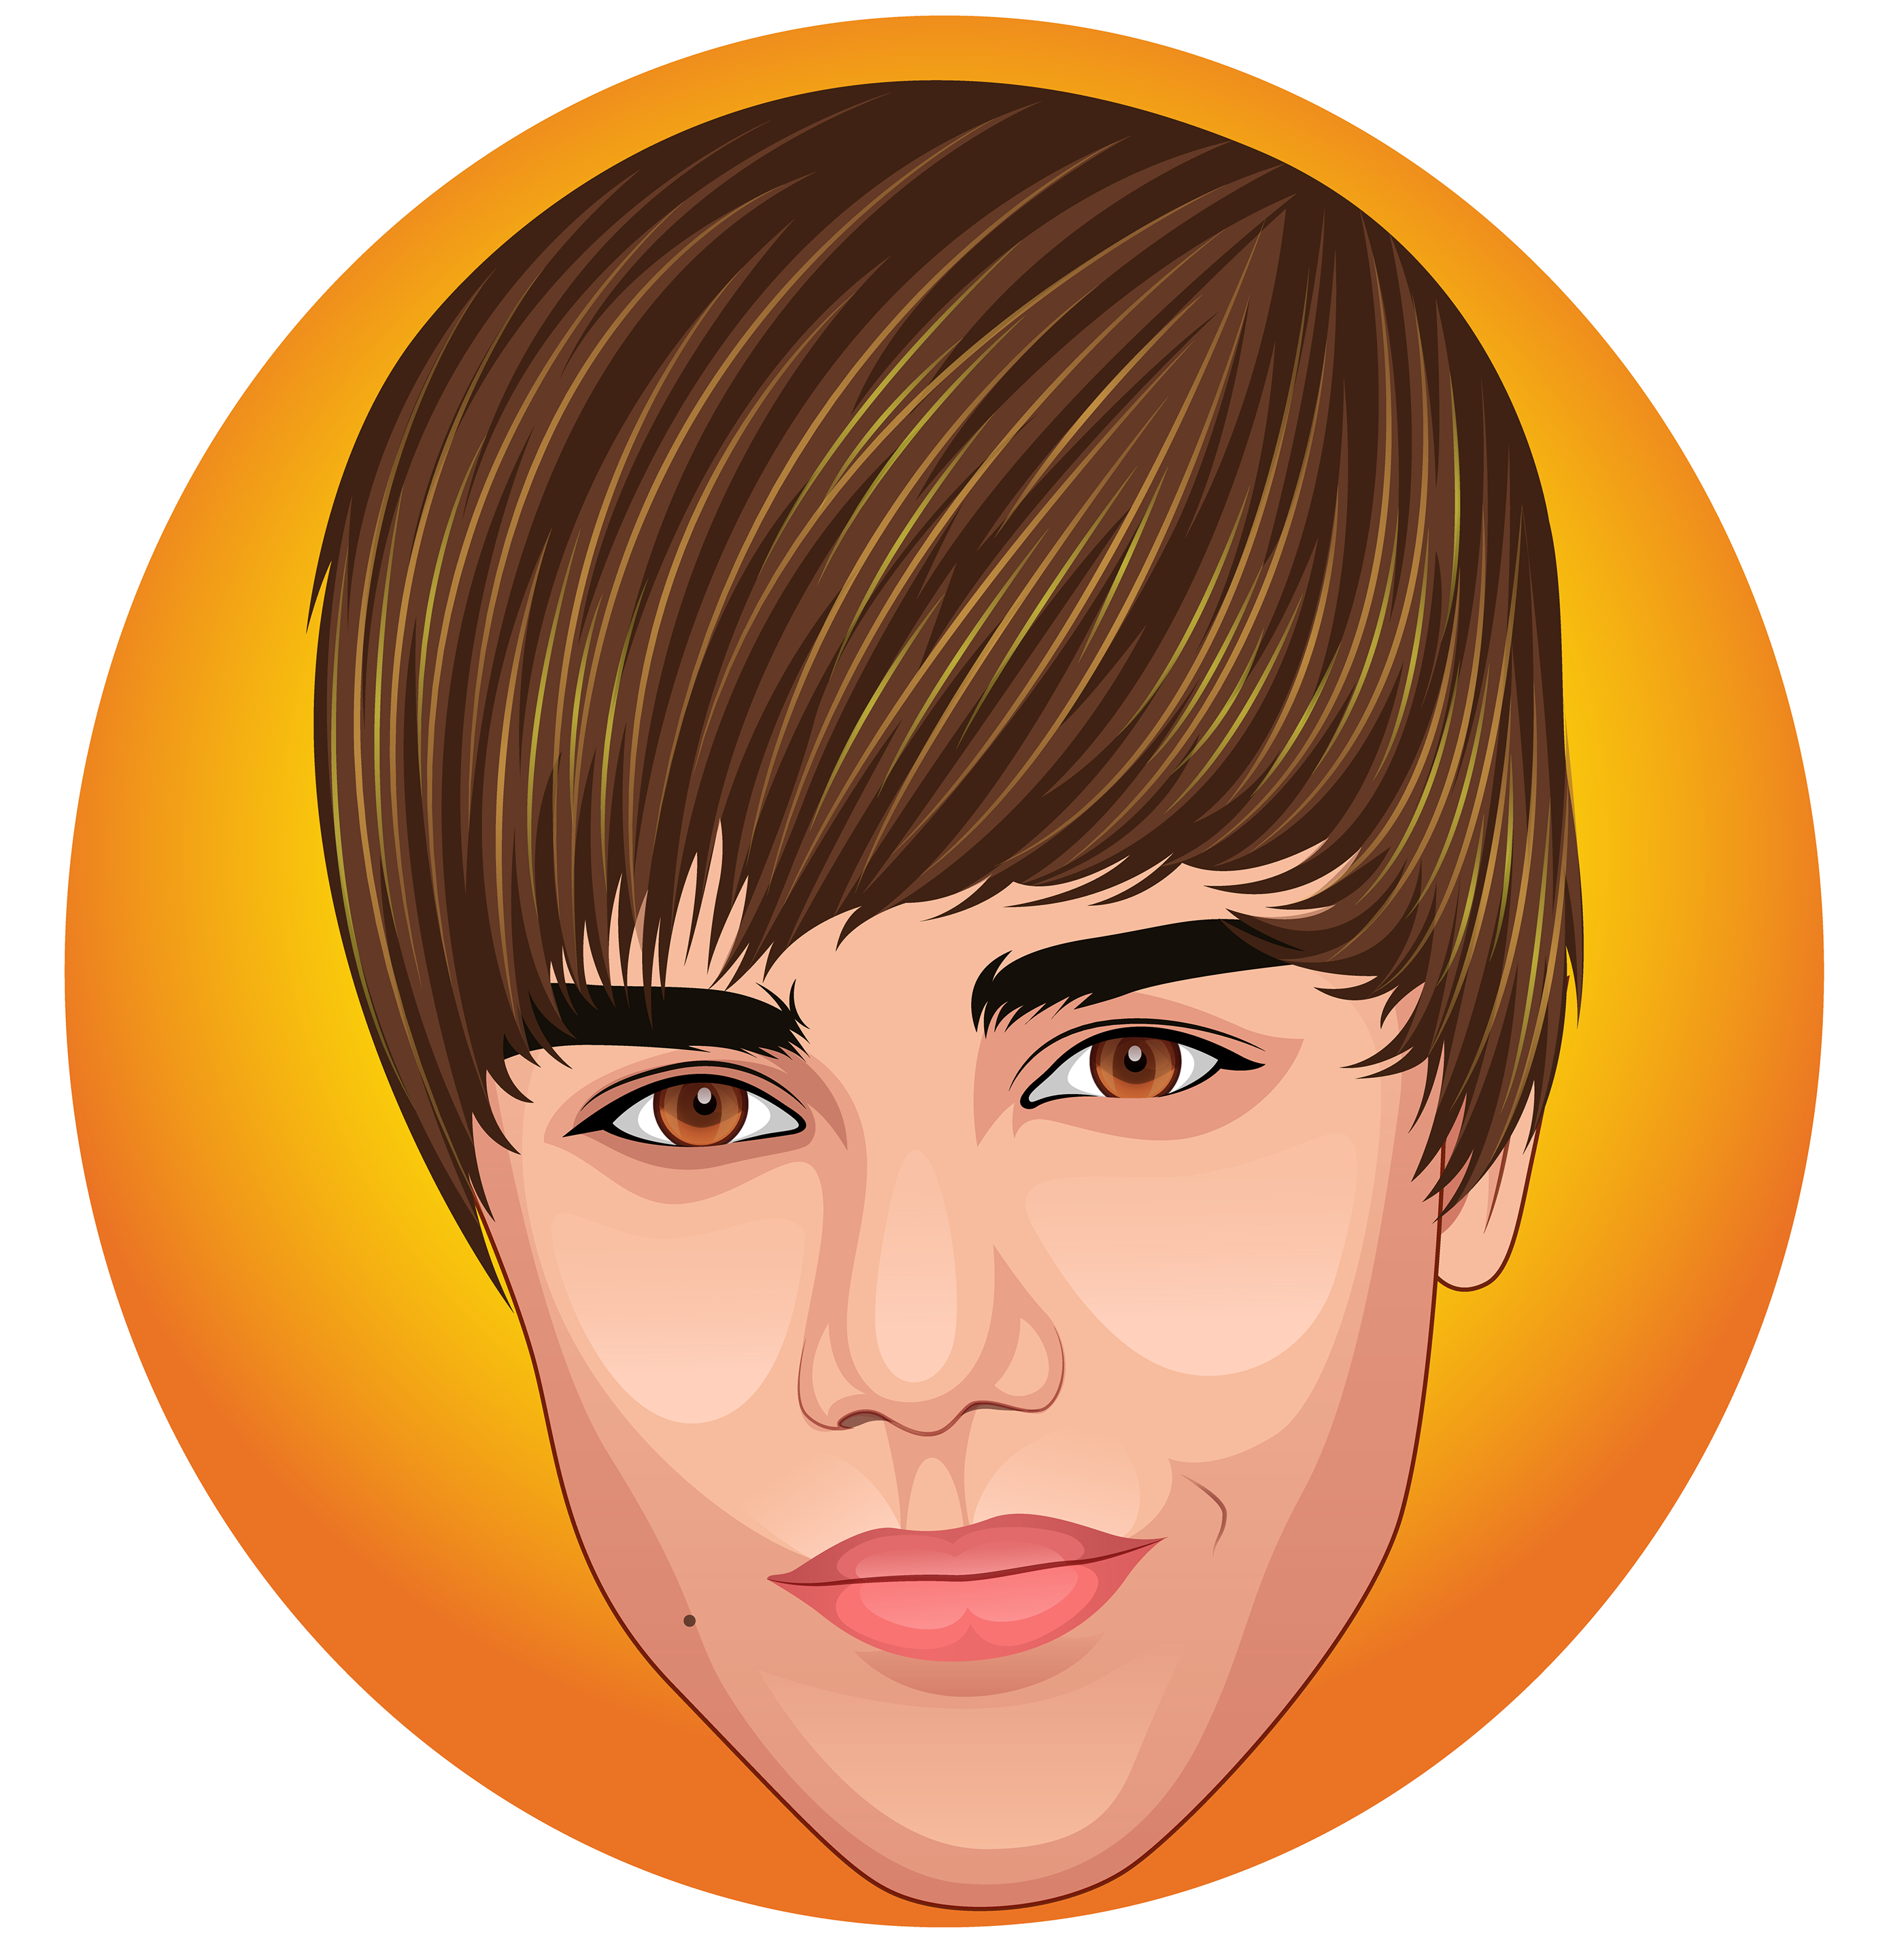 Justin Bieber Vector Portrait on Behance